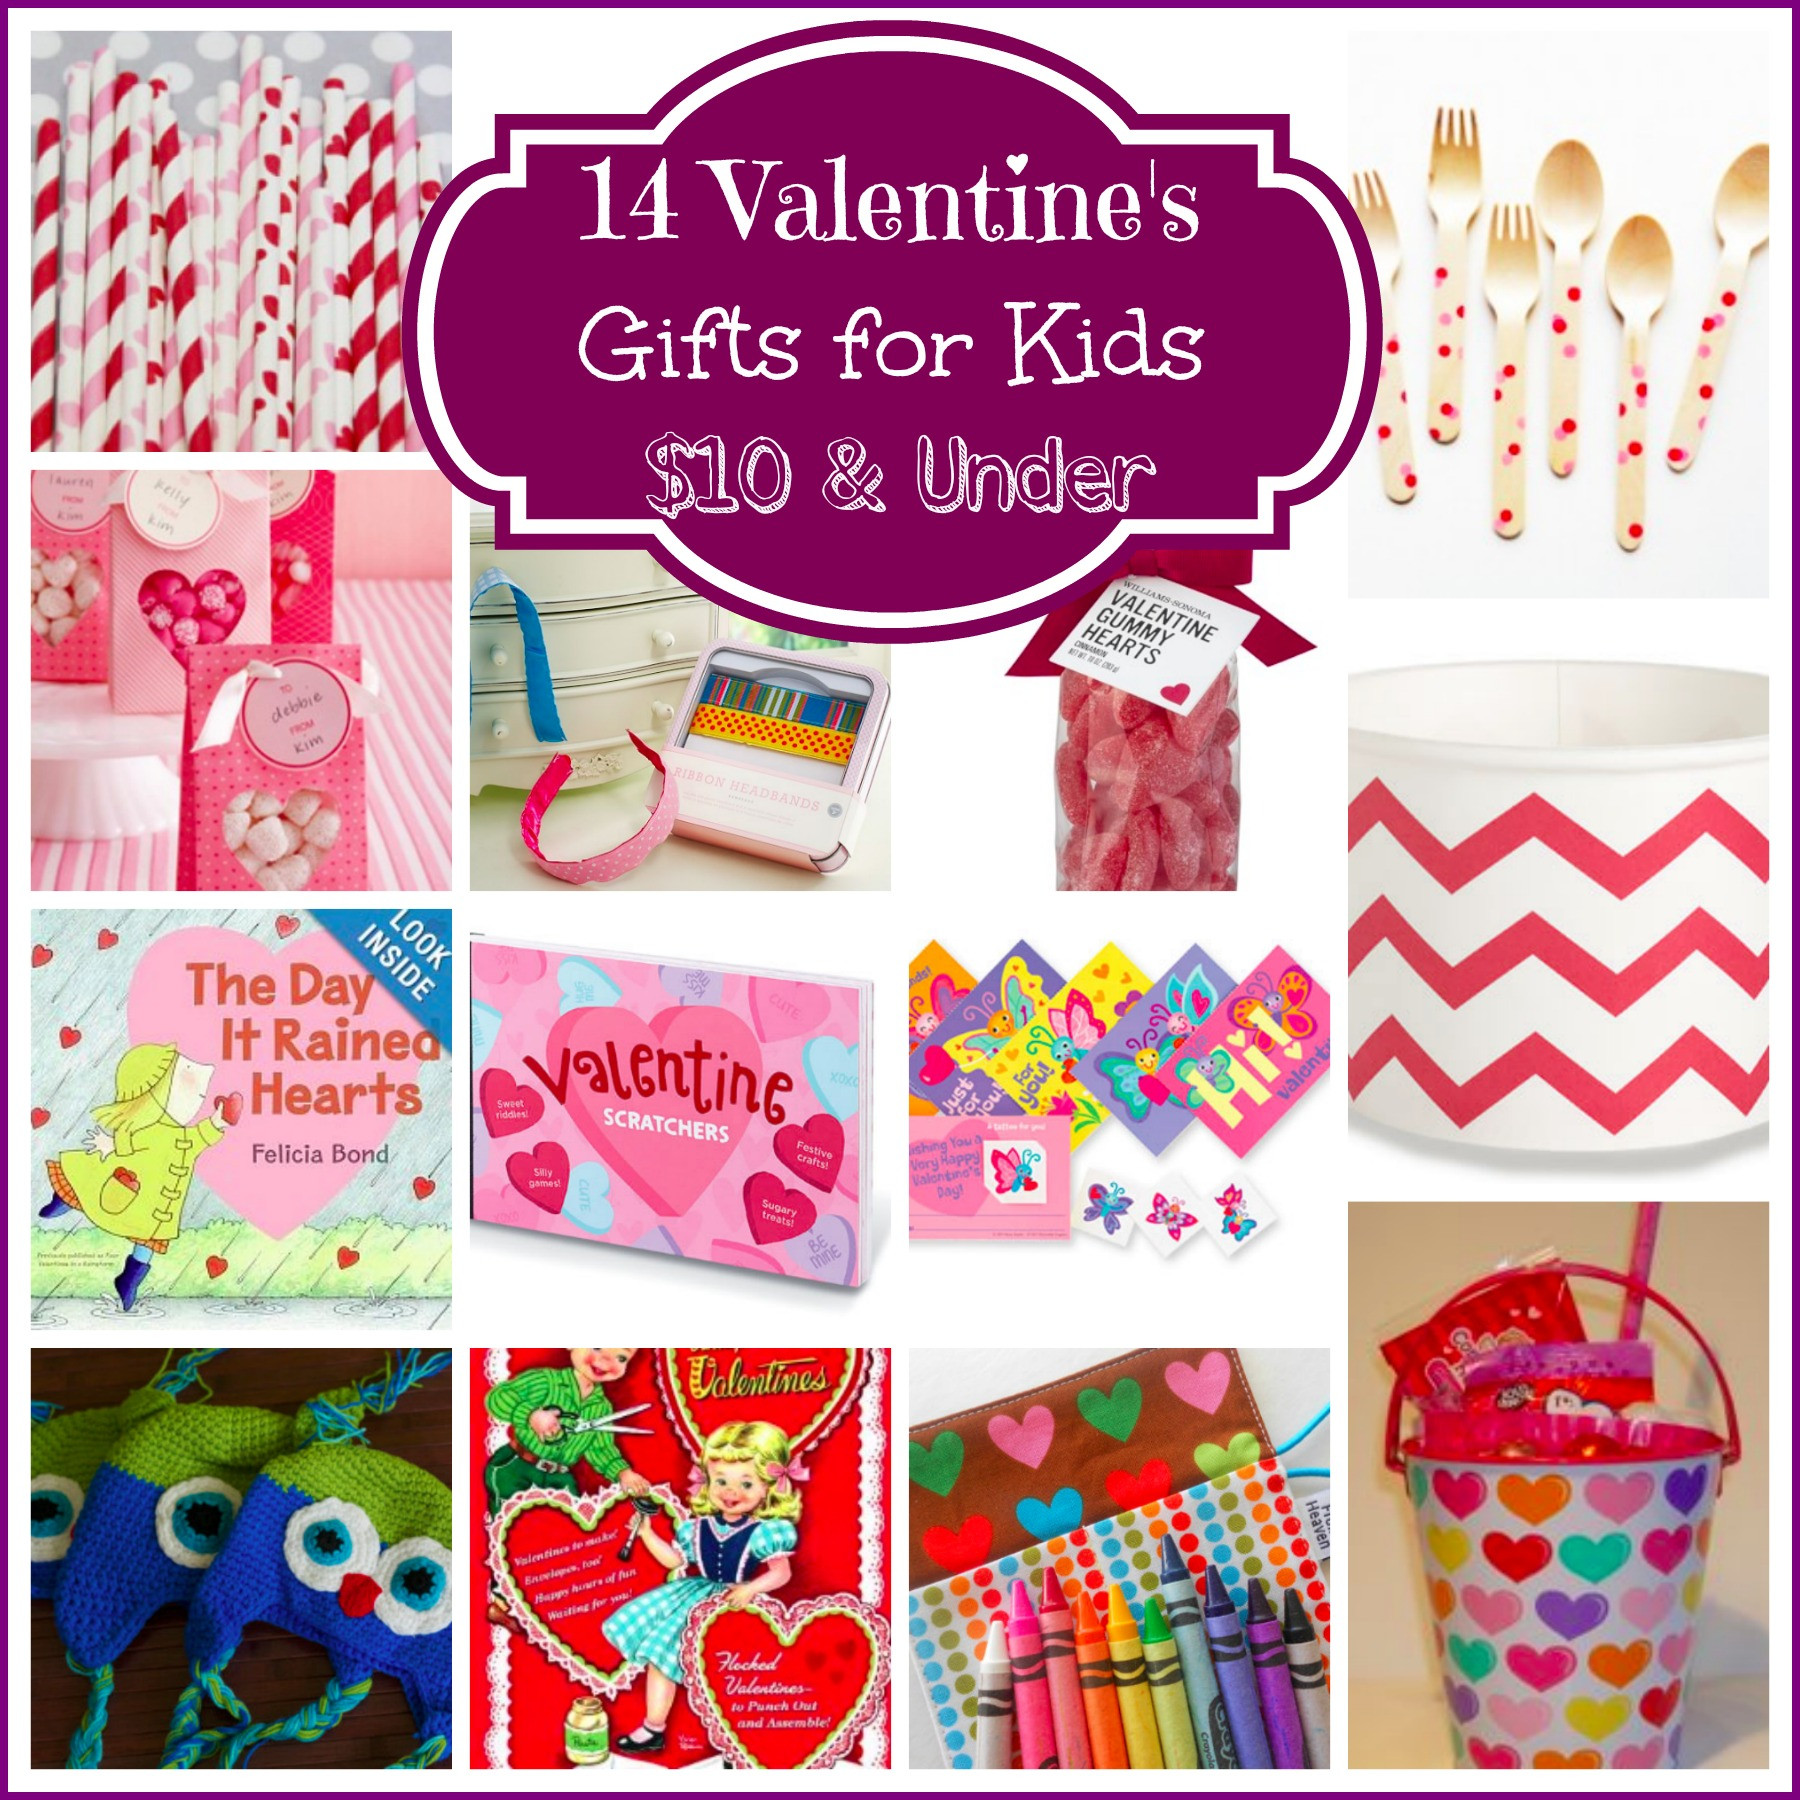 Valentine Gift Baskets For Kids
 14 Valentine’s Day Gifts for Kids $10 & Under